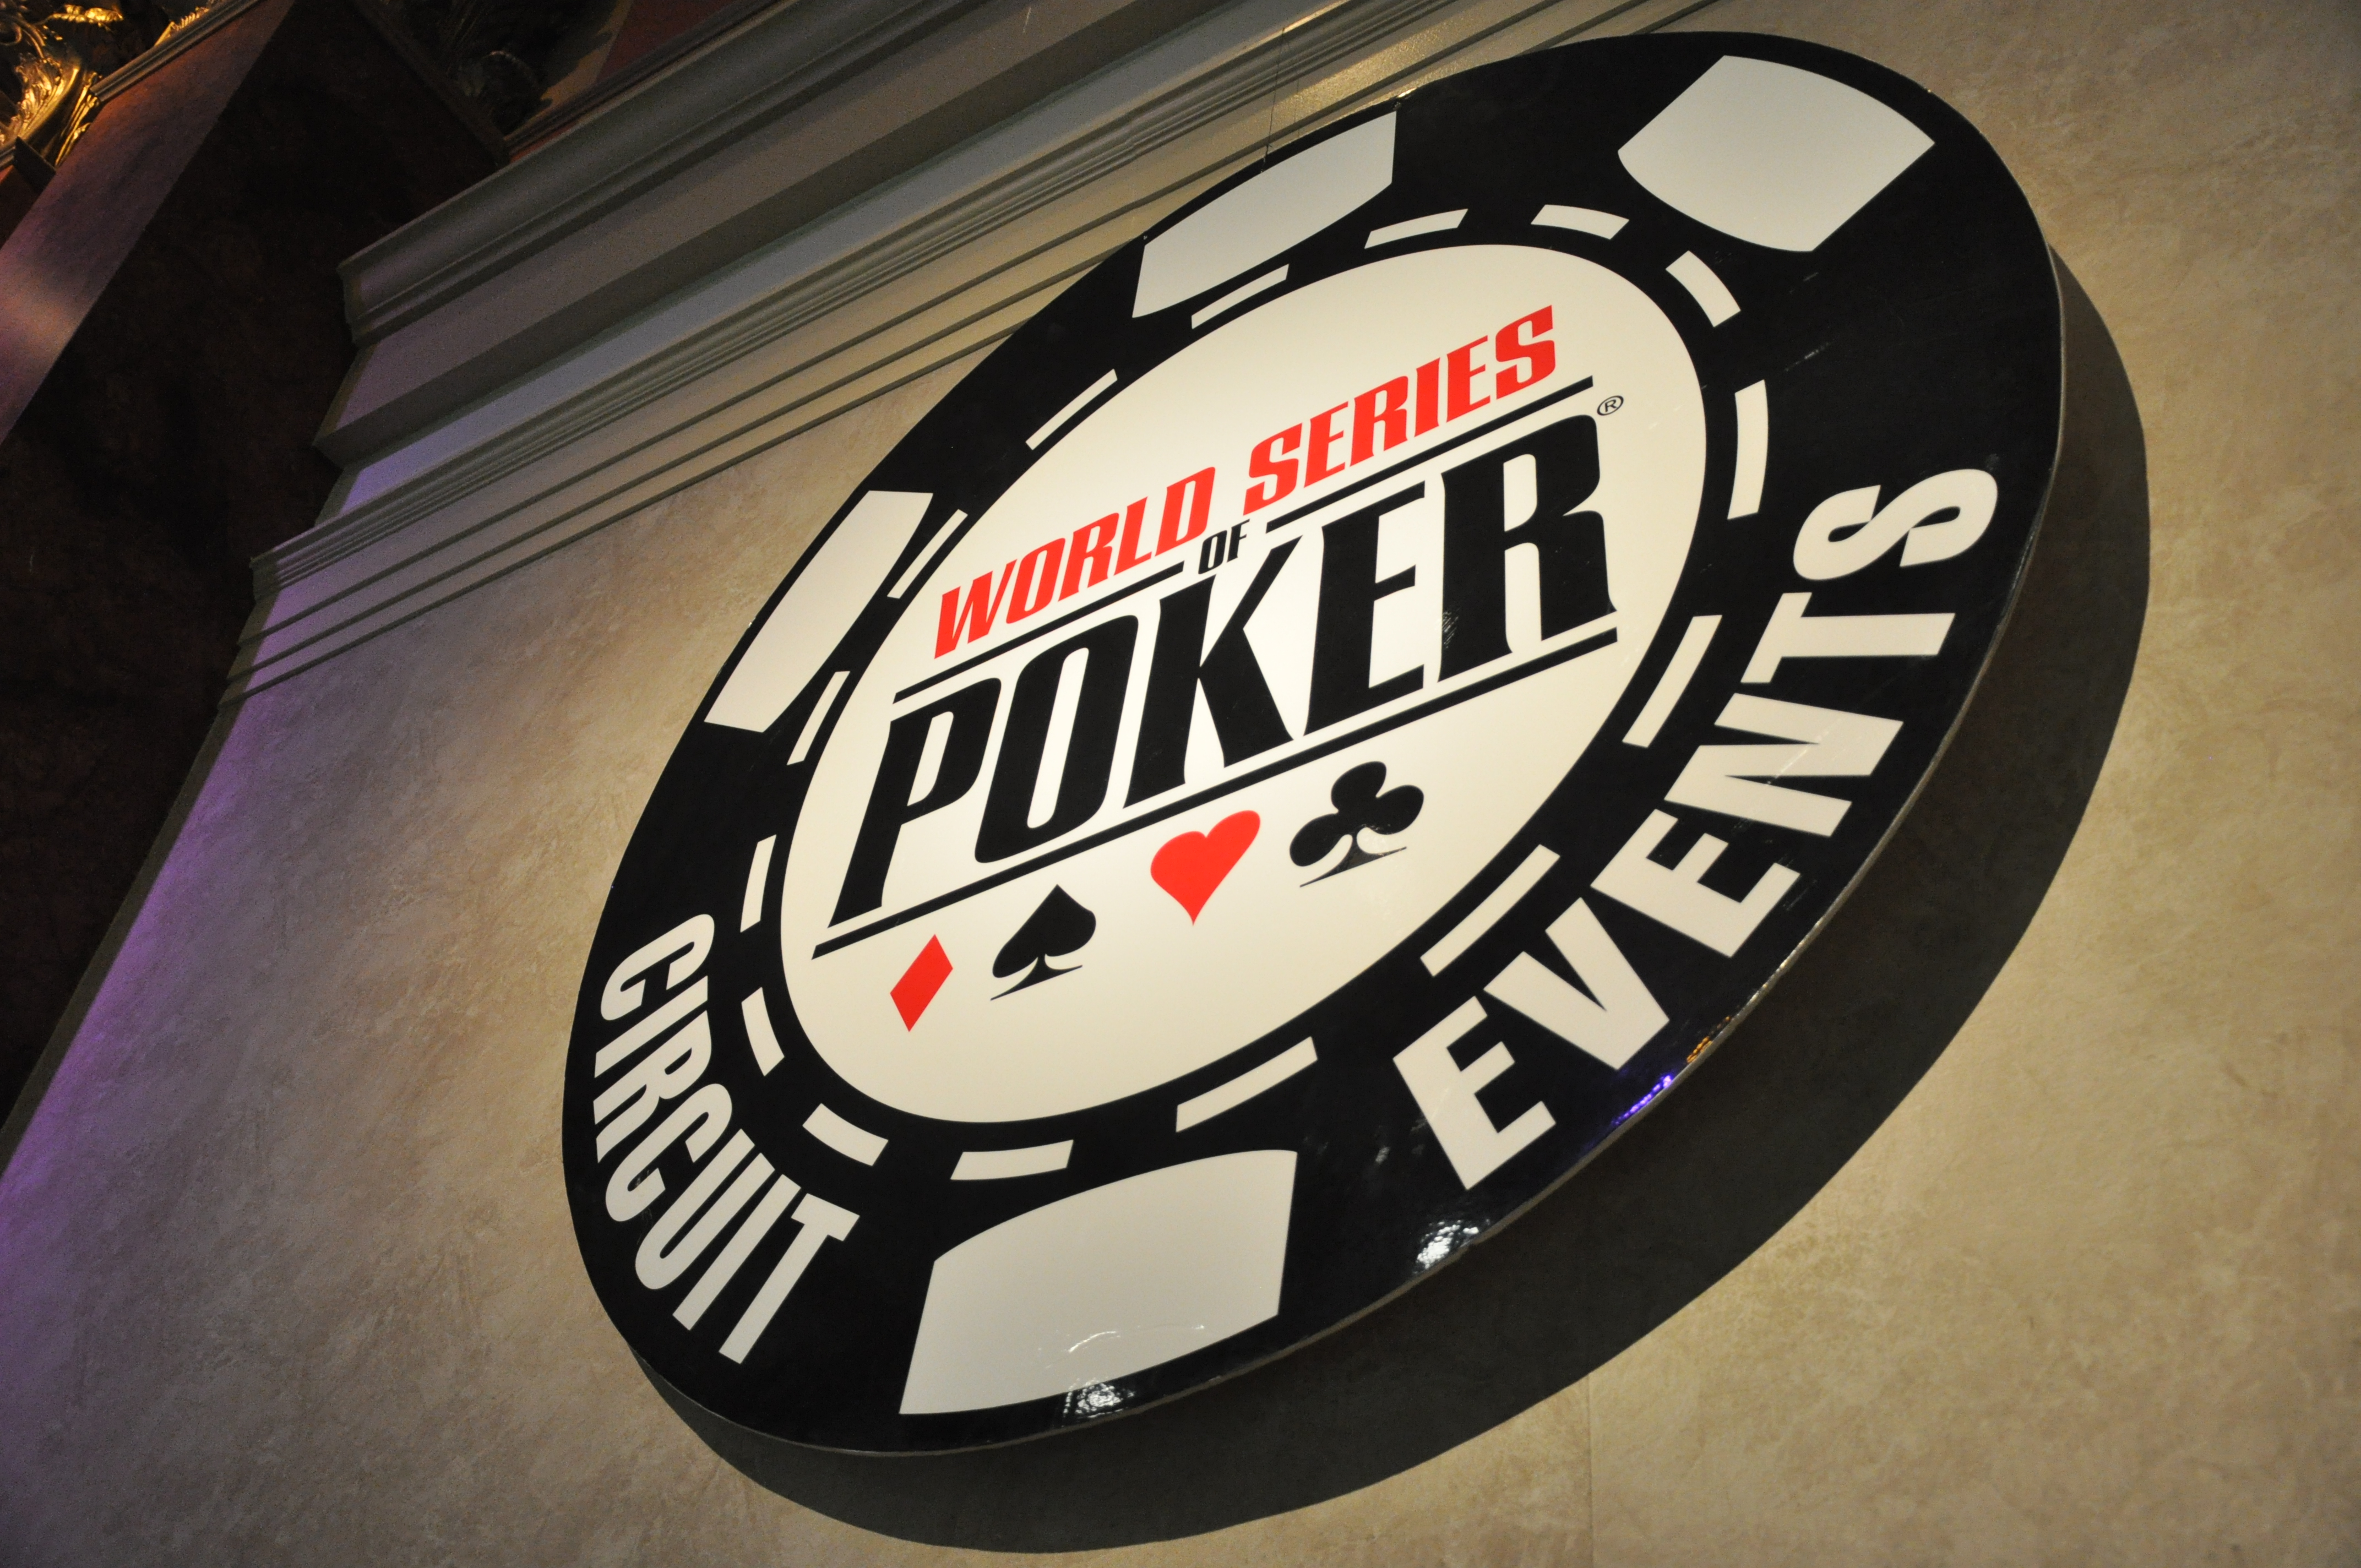 horseshoe casino baltimore poker tournament schedule